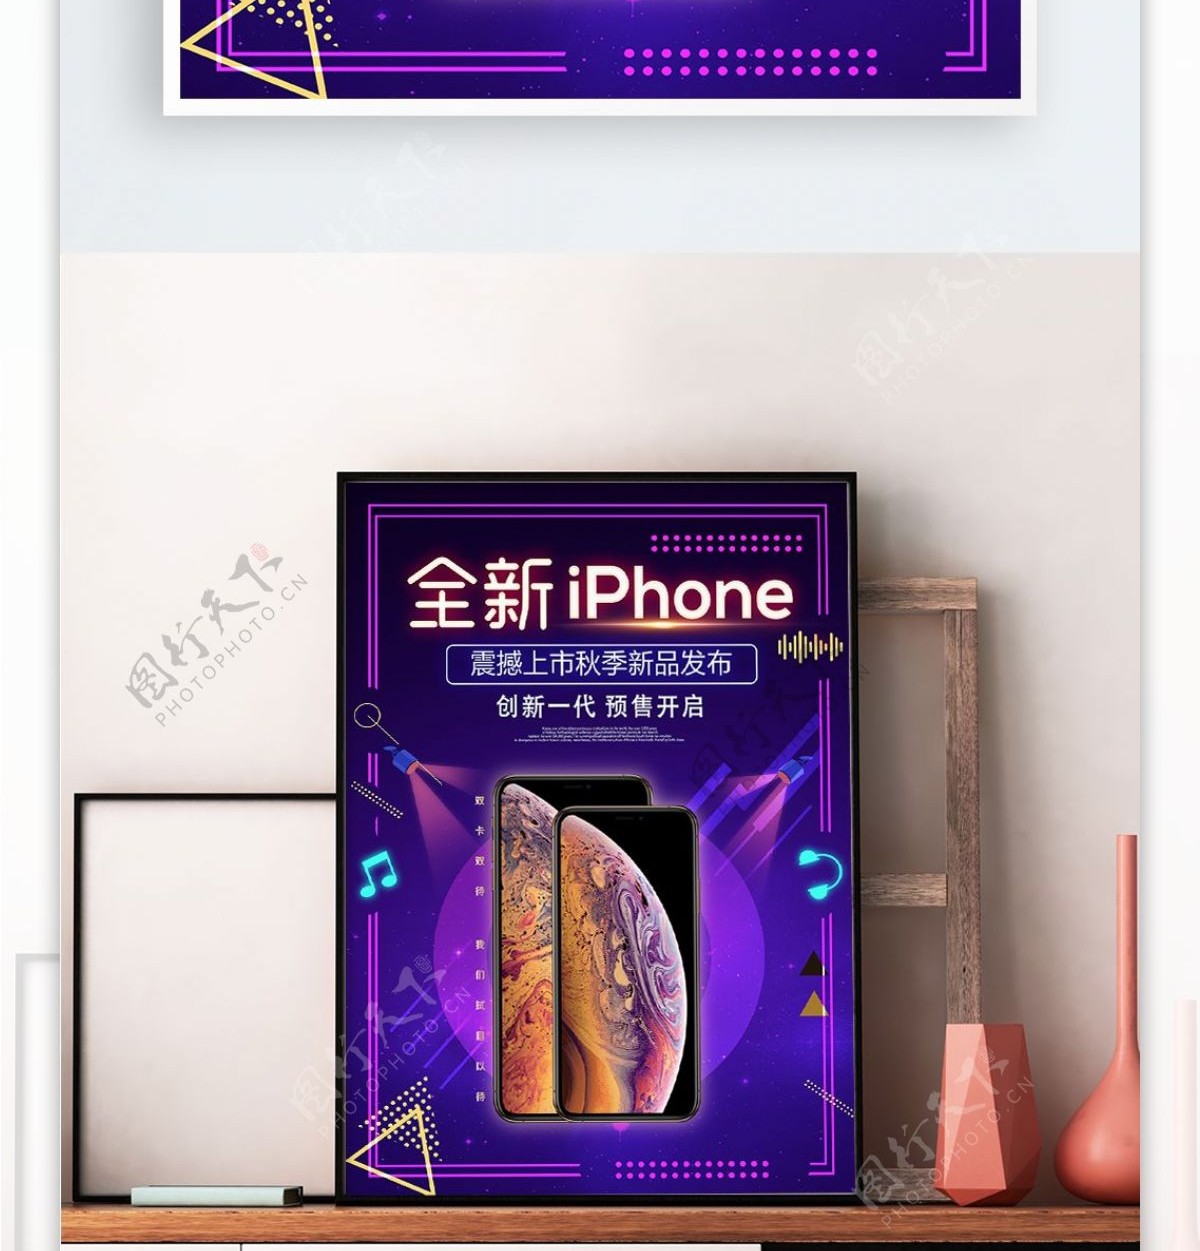 iphone苹果手机上市海报